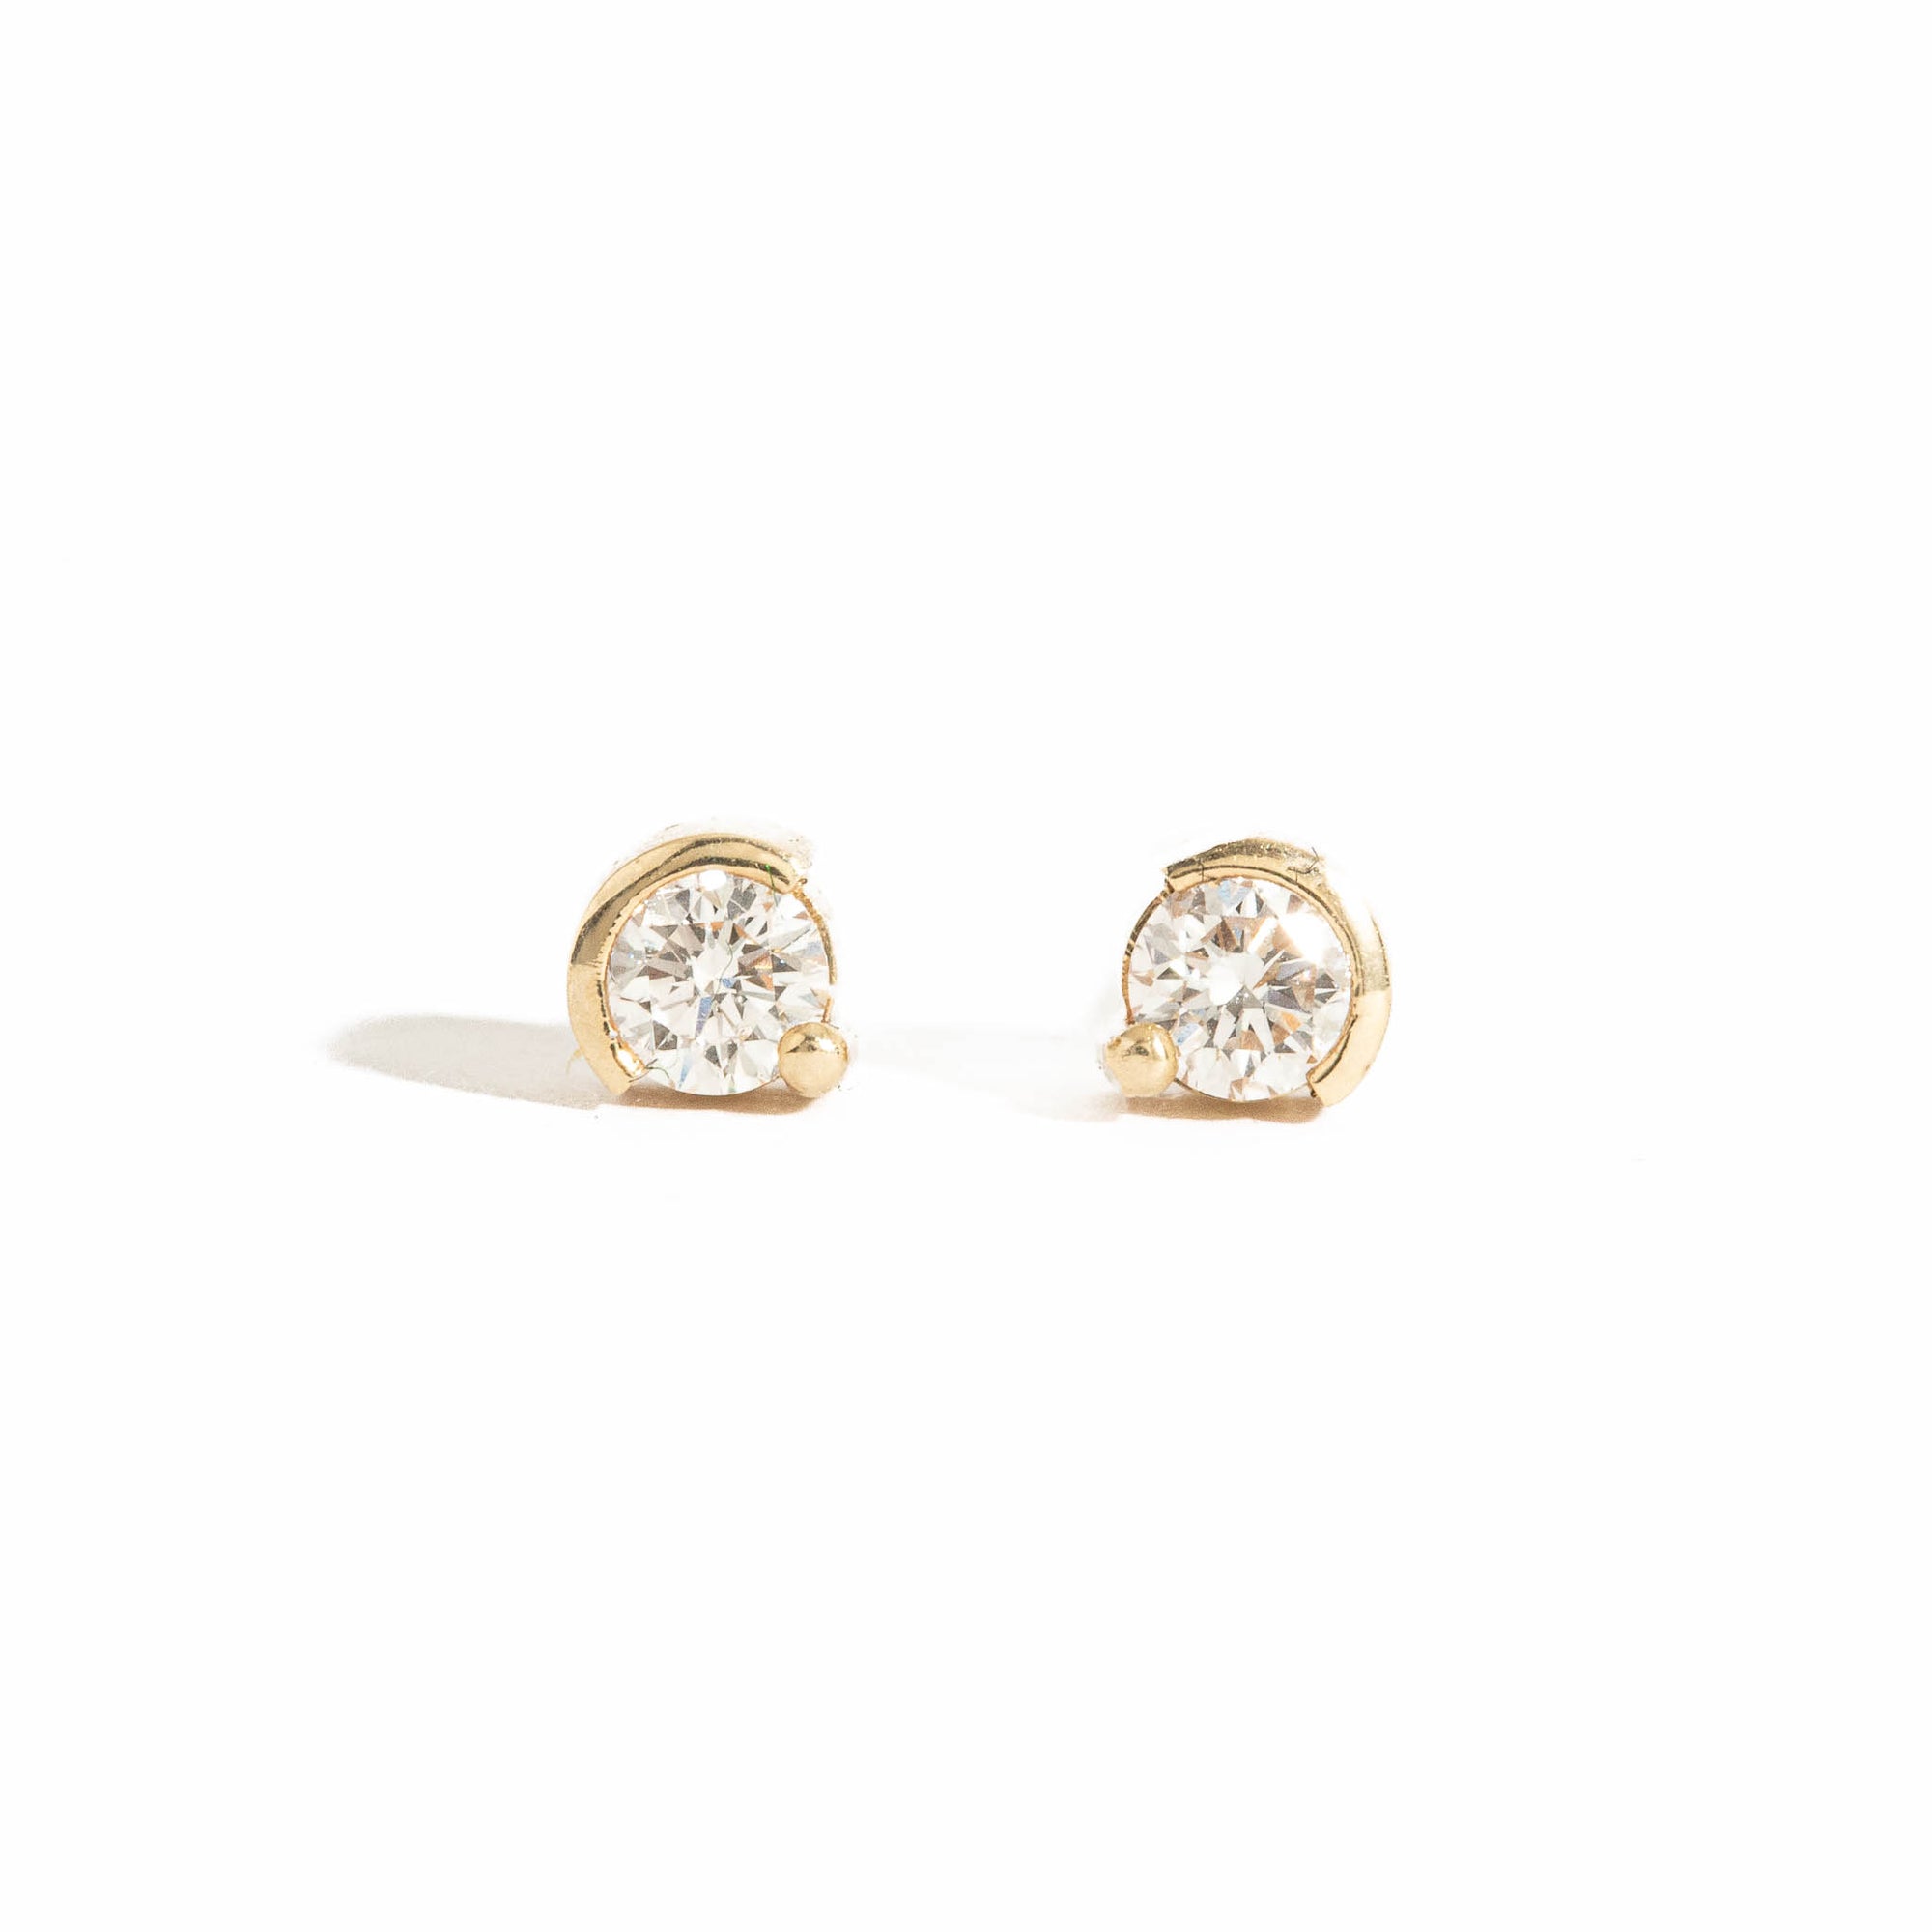  Round Brilliant Cut White Diamond Earrings with Half Bezel